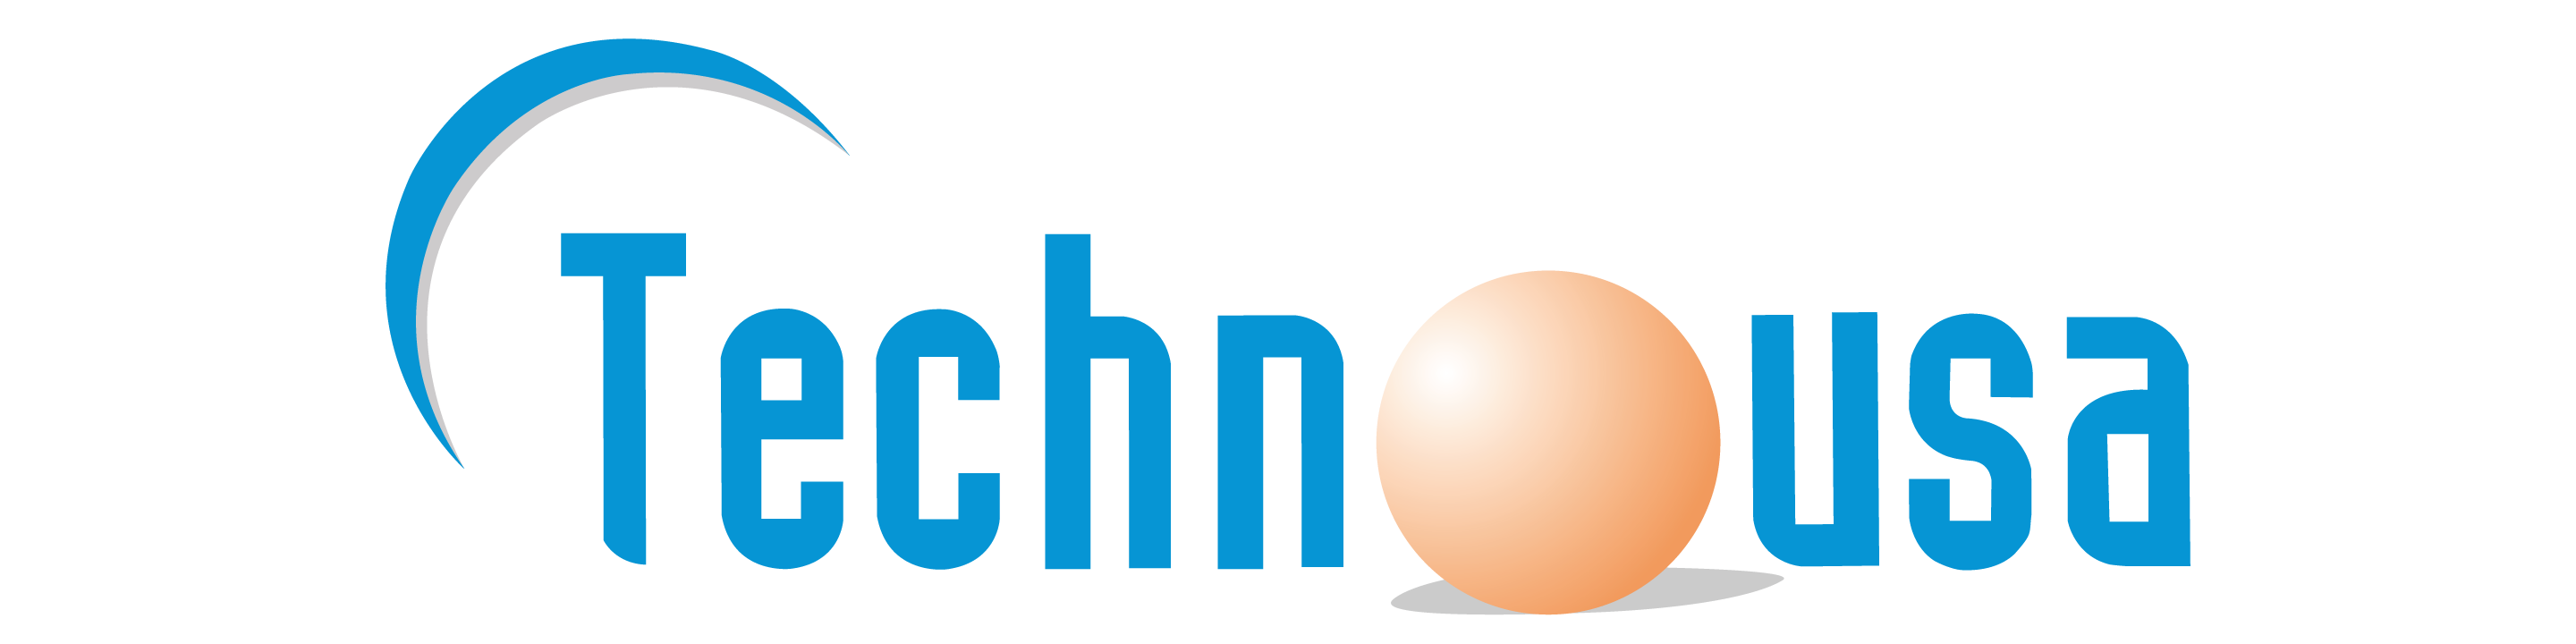 Technousa Consulting Services Pvt. Ltd. logo